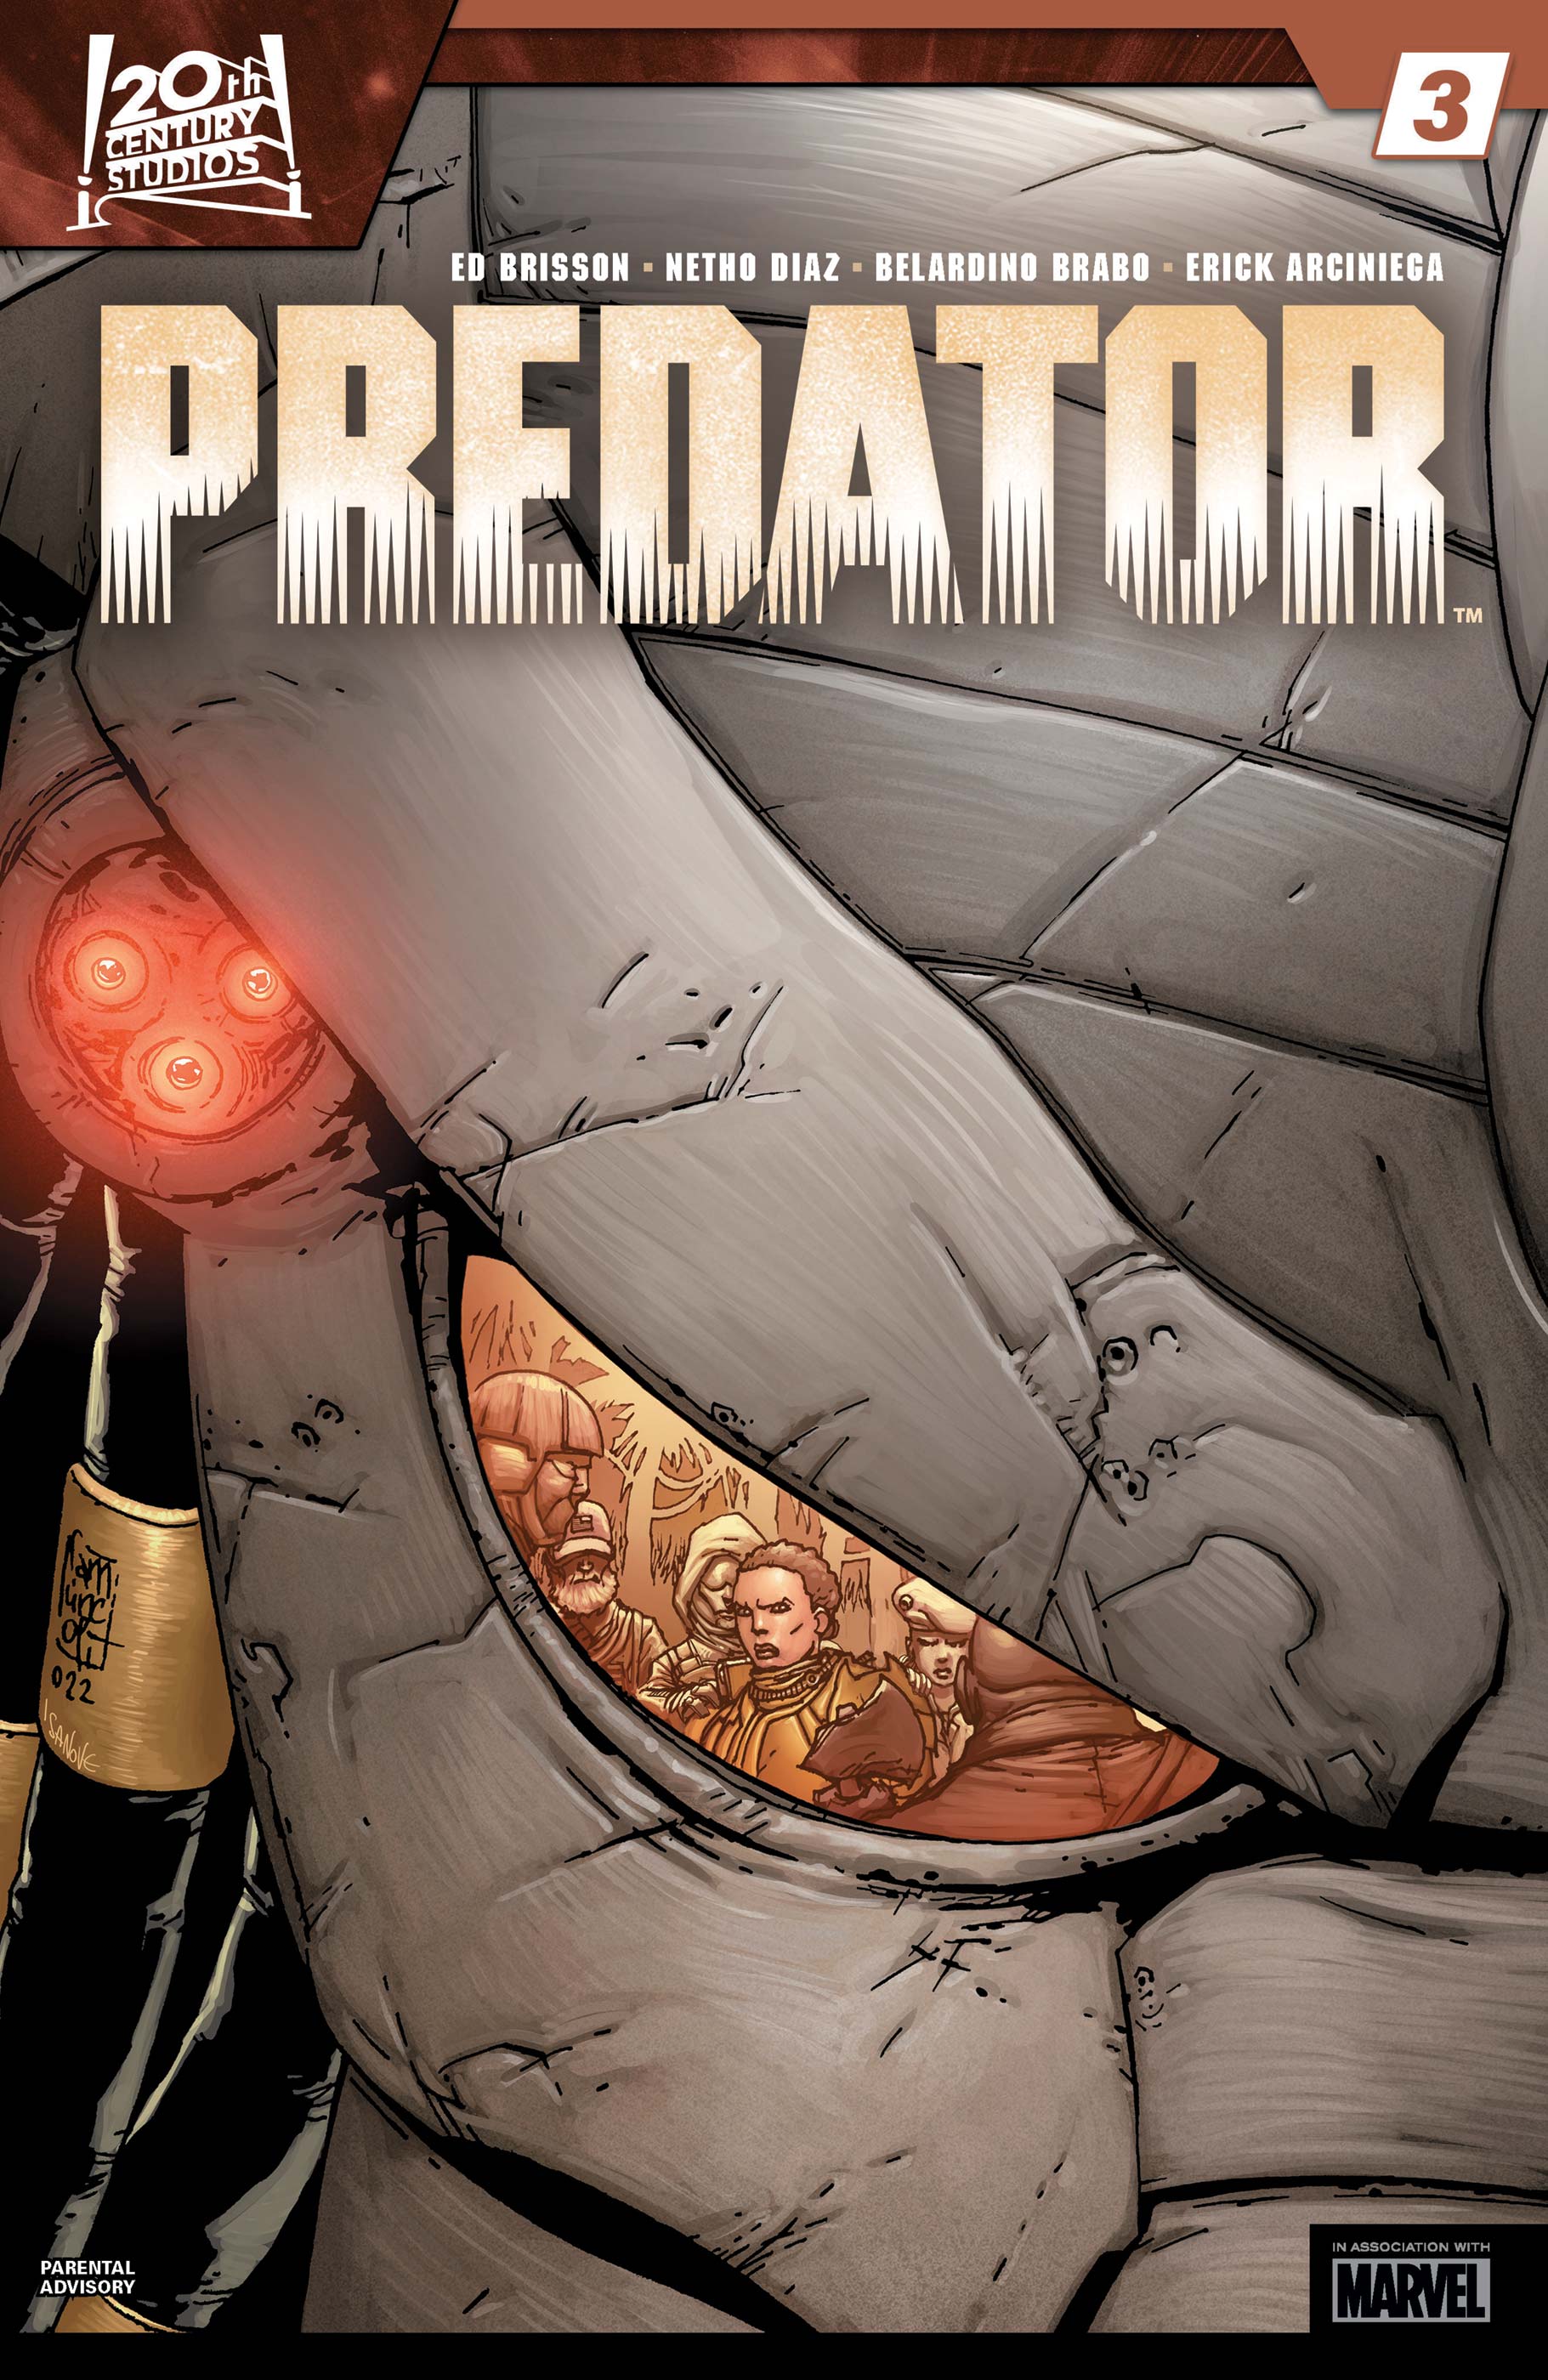 Predator (2023) #3